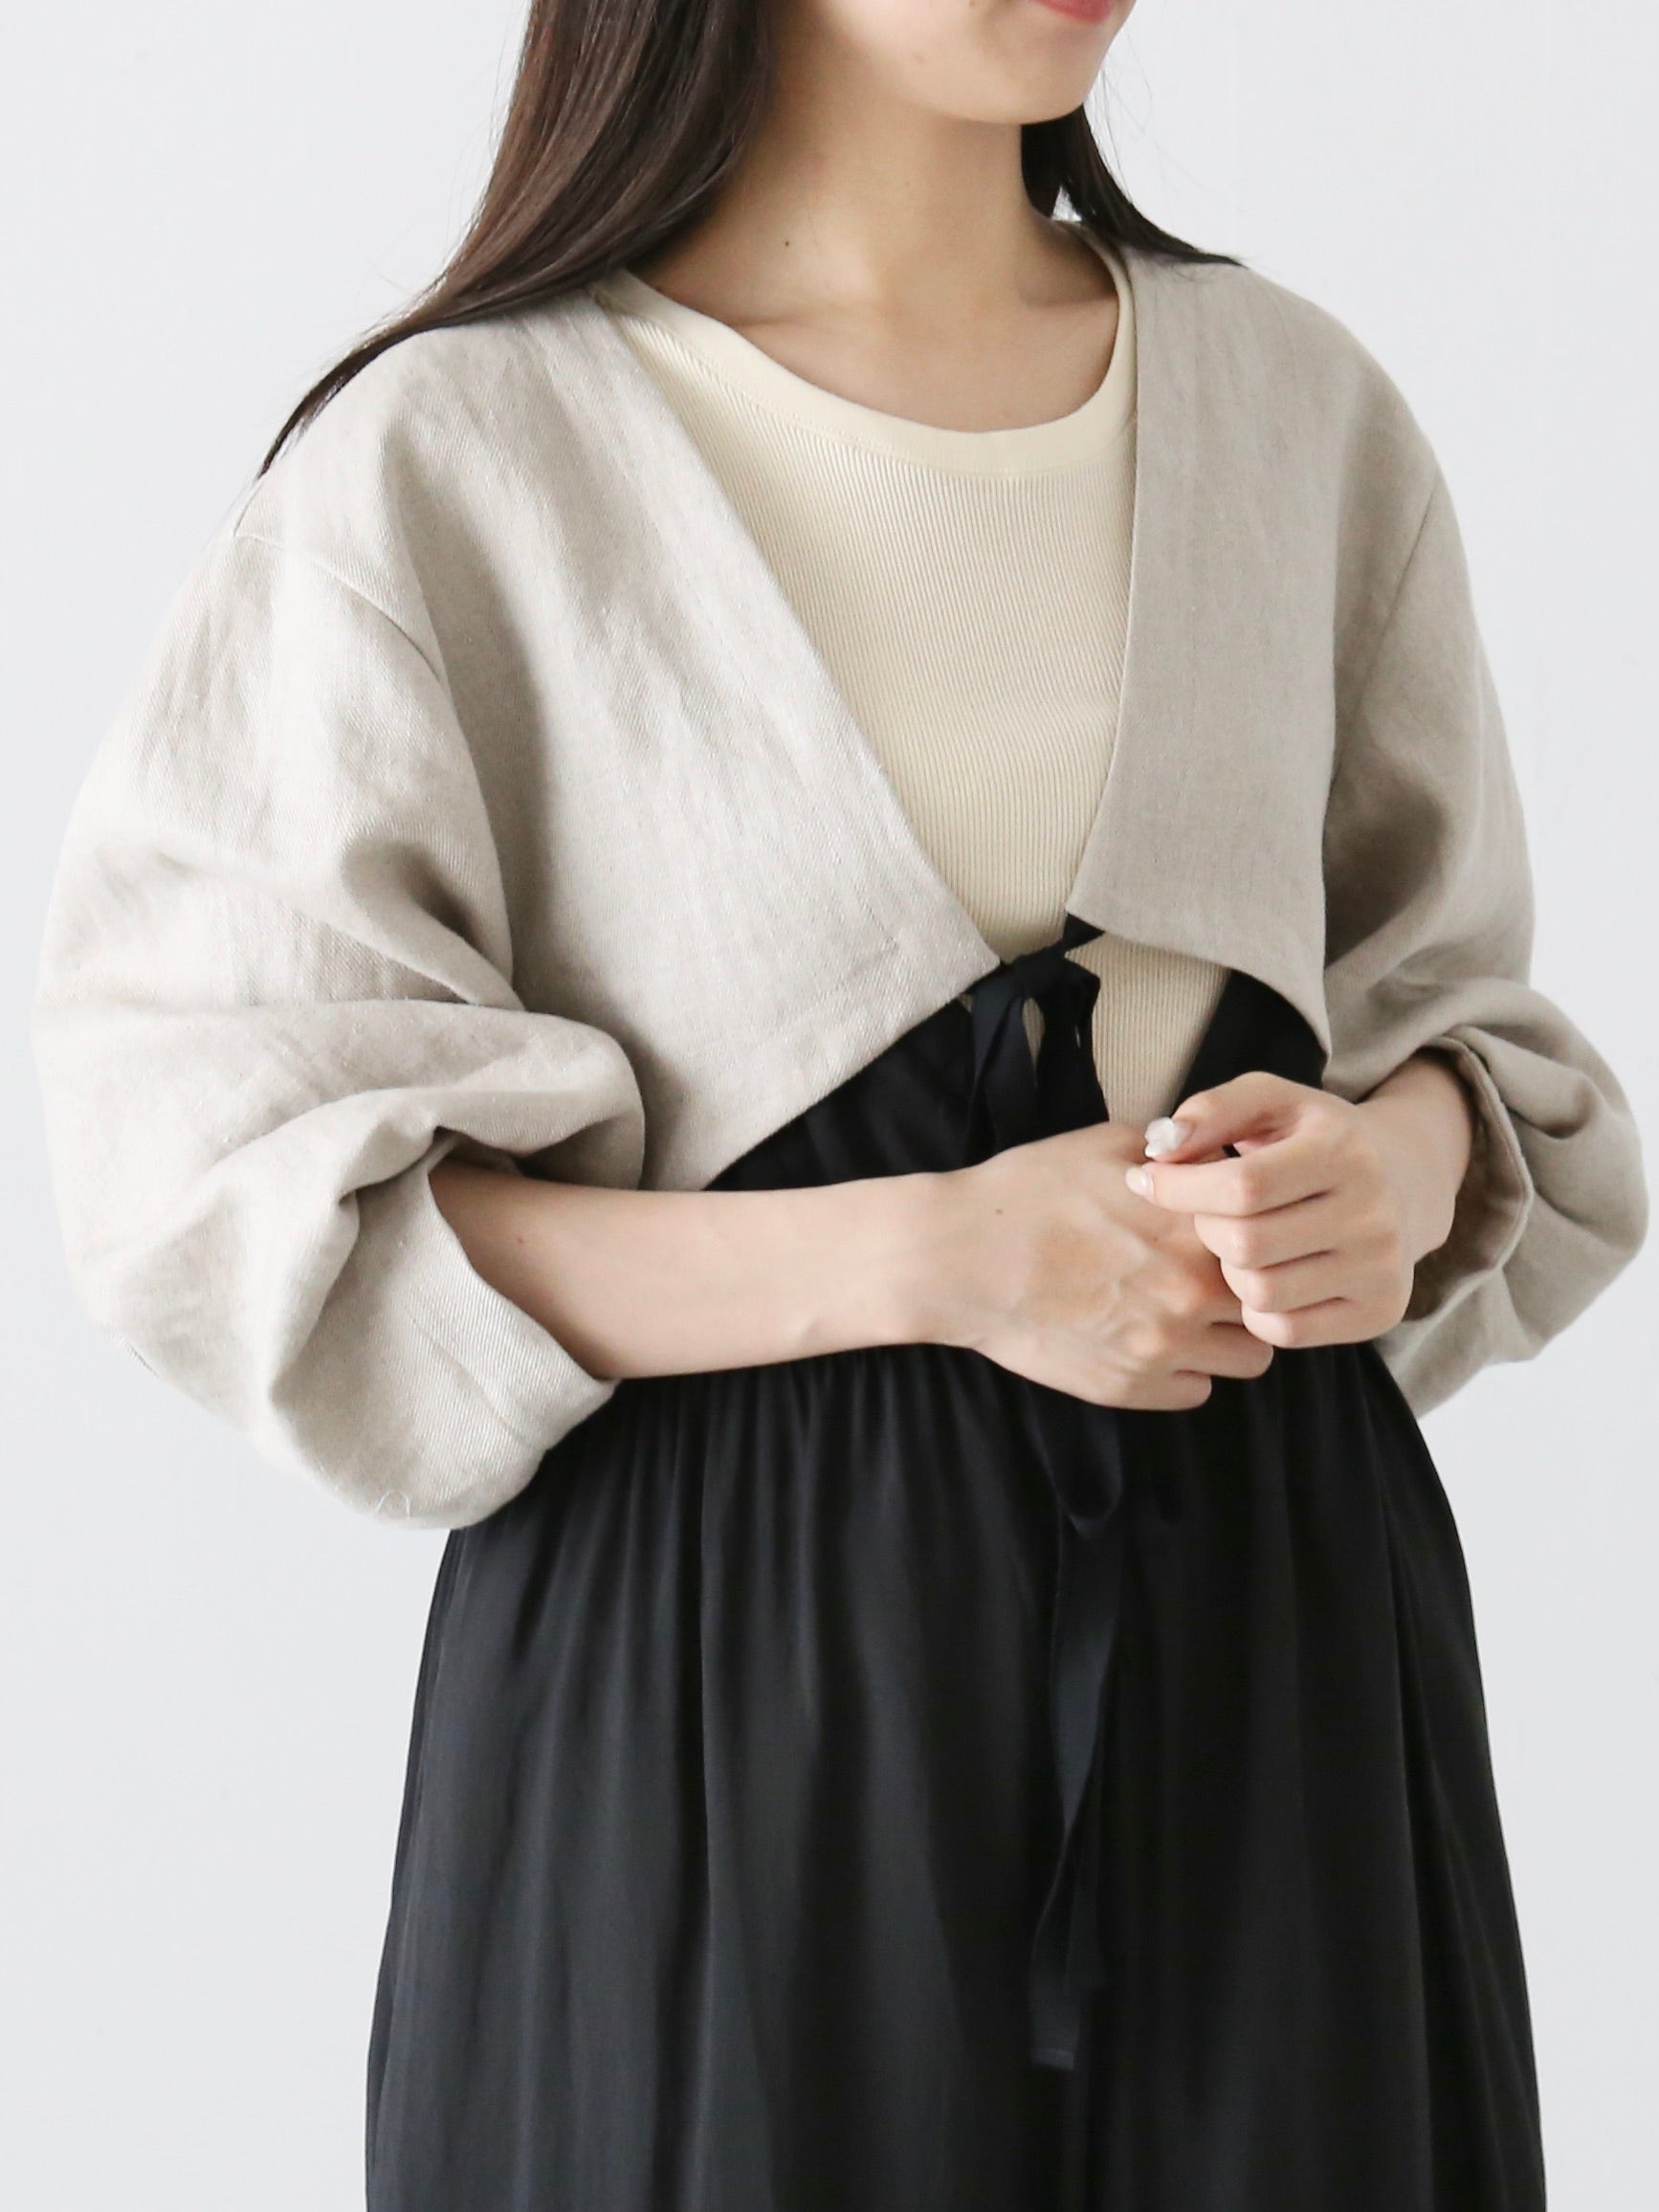 ayanoguchiaya ショートボレロ [dress.46]